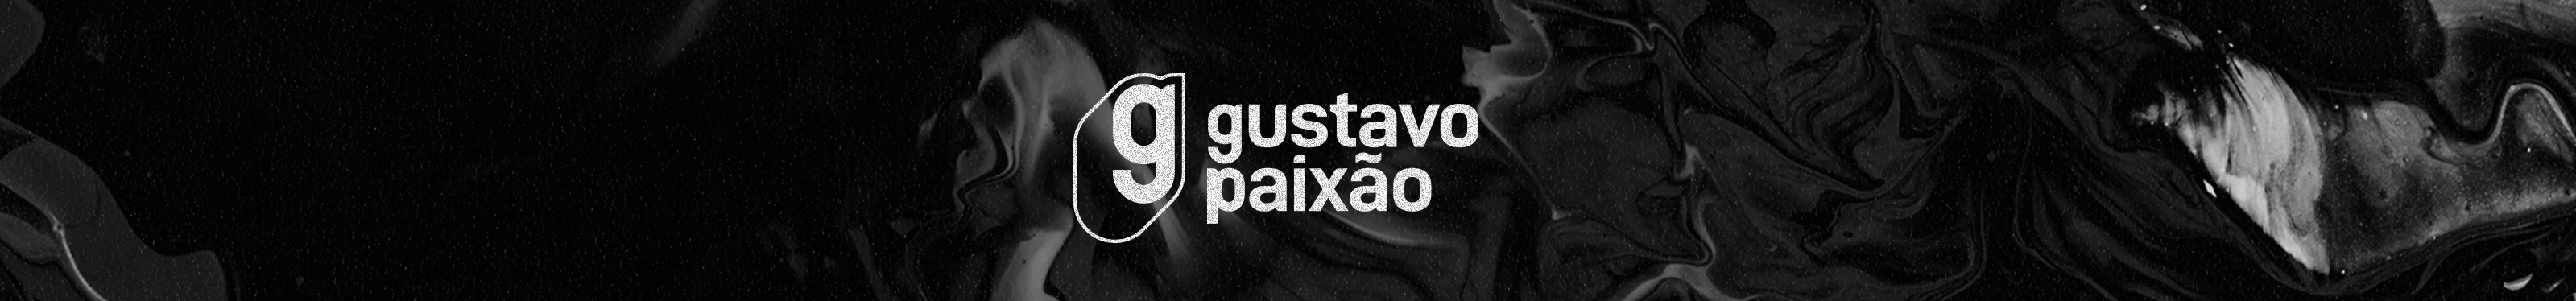 Gustavo Paixão's profile banner